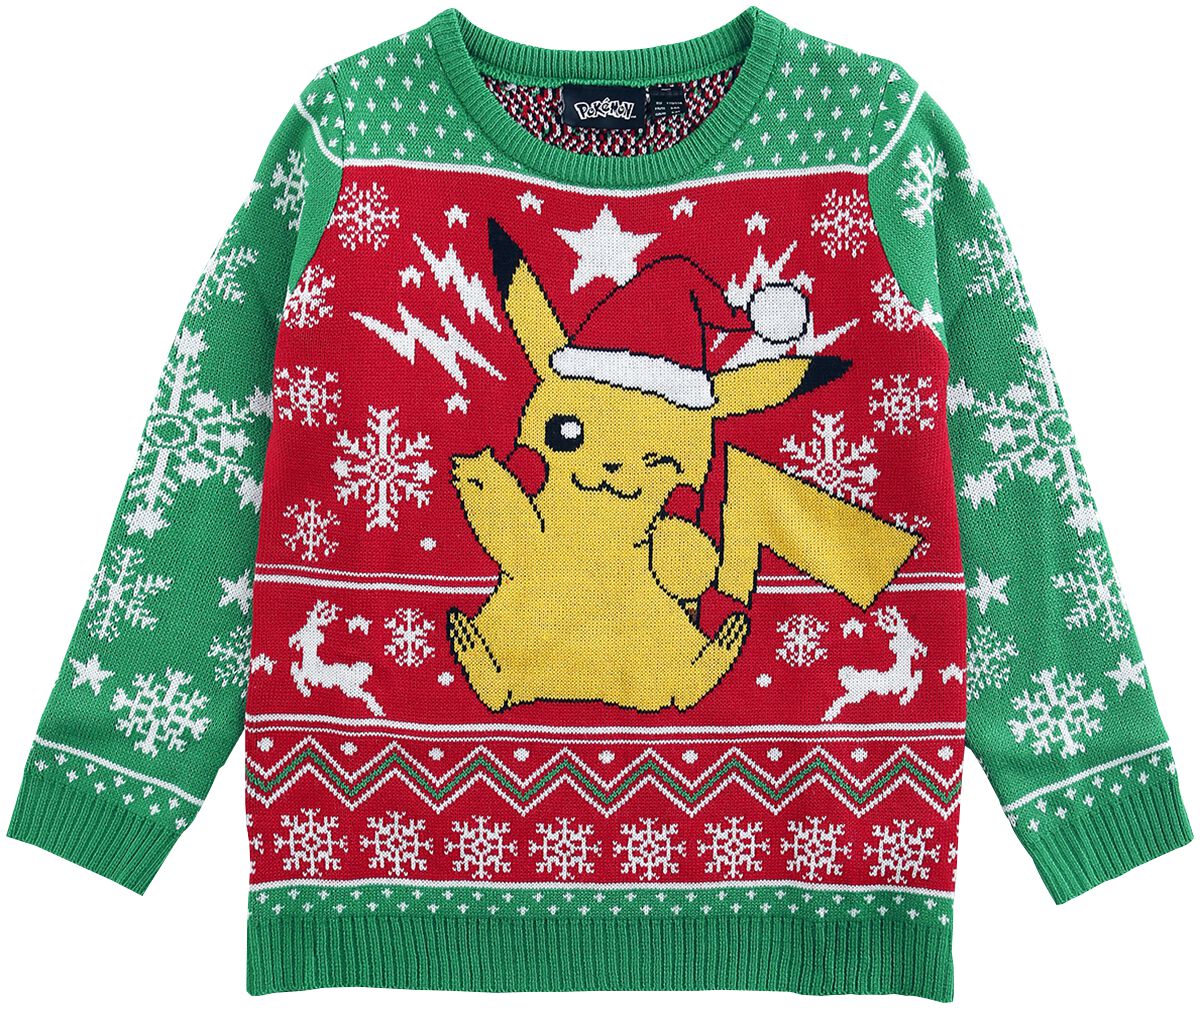 Sweat-Shirt Gaming de Pokémon - Kids - Pikachu - Pika! Pika! - 122/128 - pour filles & garçonse - mu